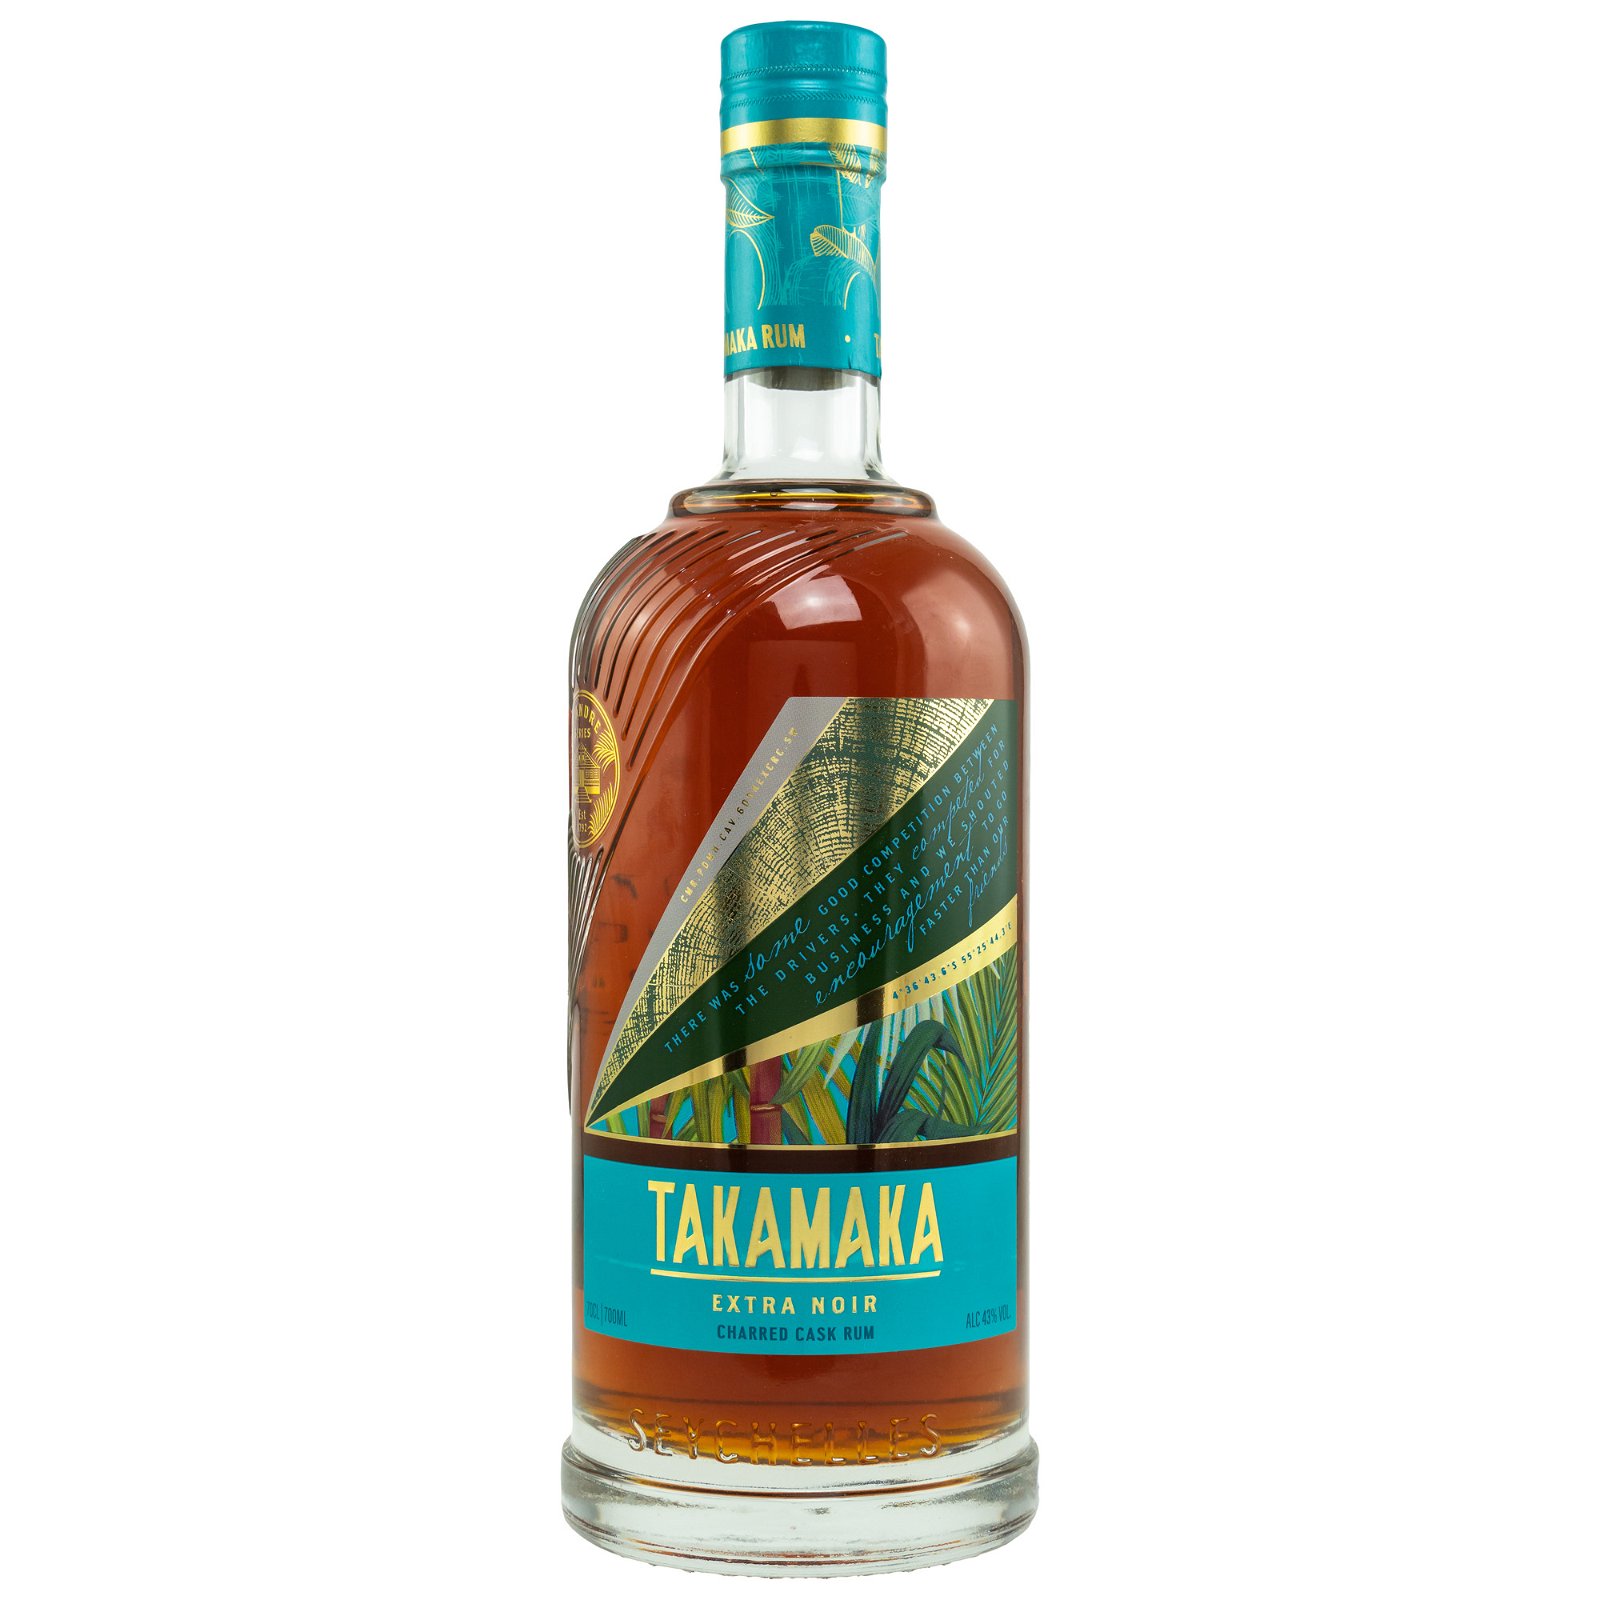 Takamaka Extra Noir Charred Cask Rum